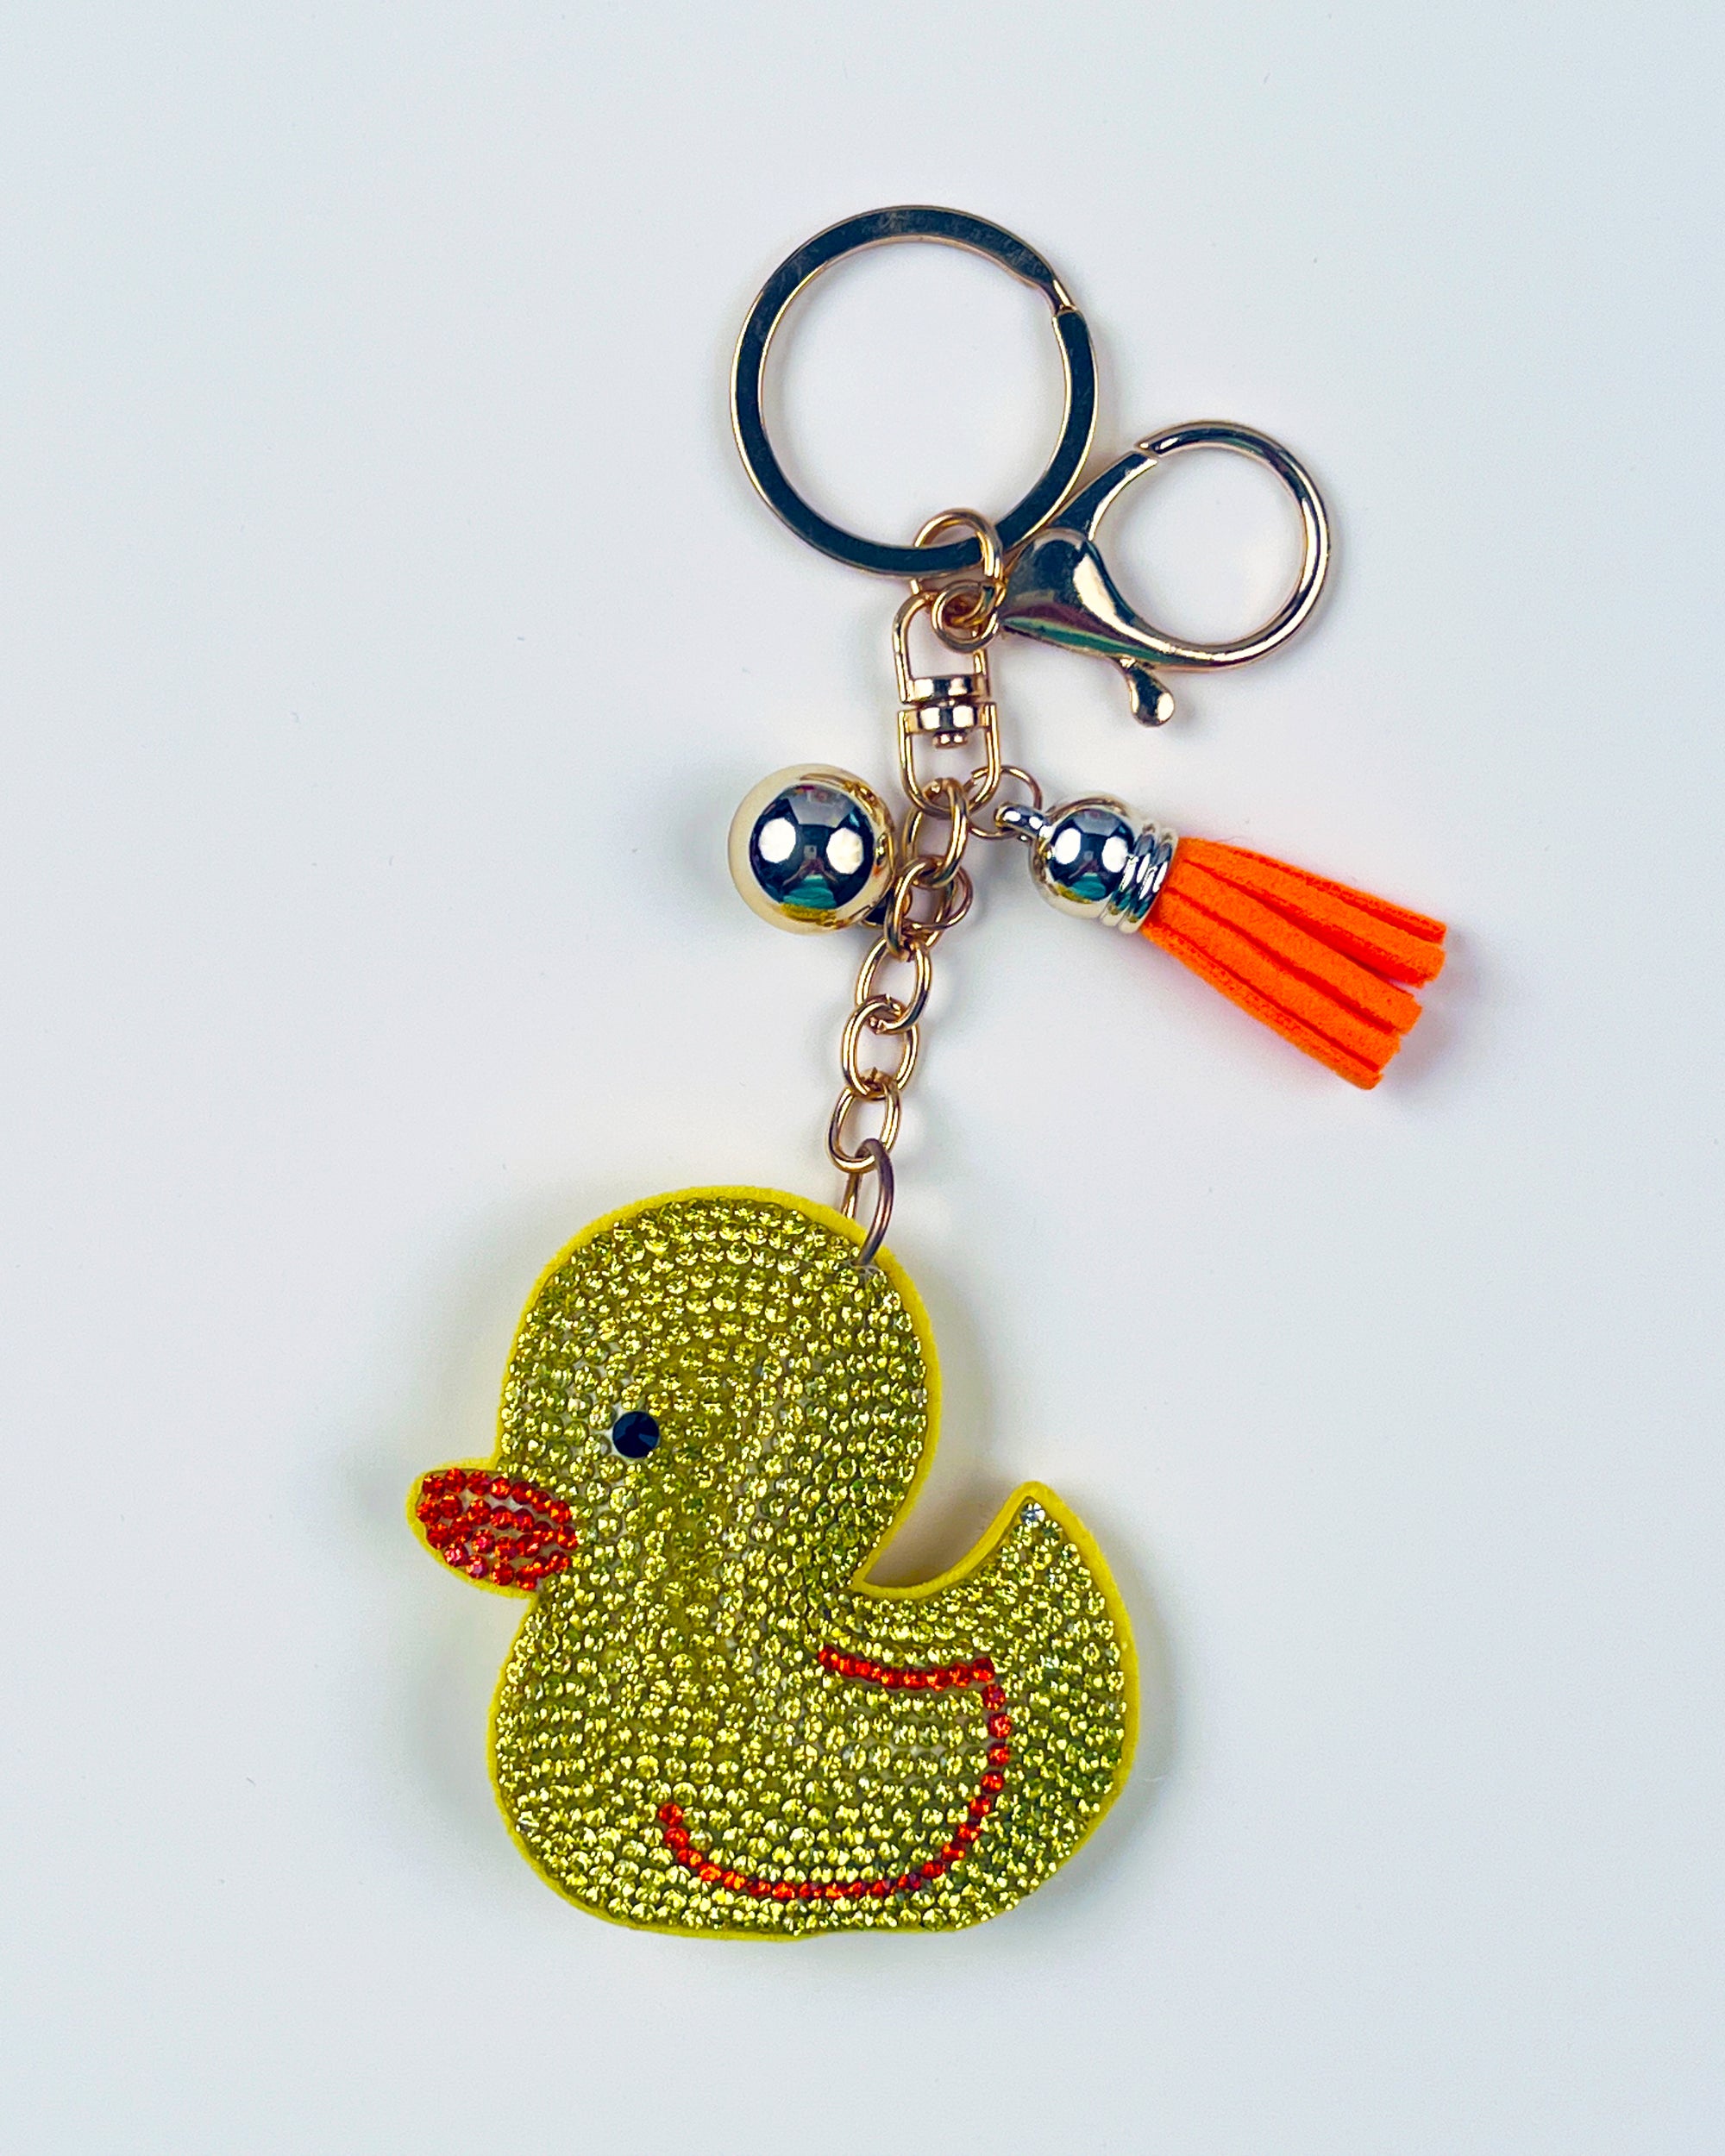 Rubber Duckie Bling Keychain